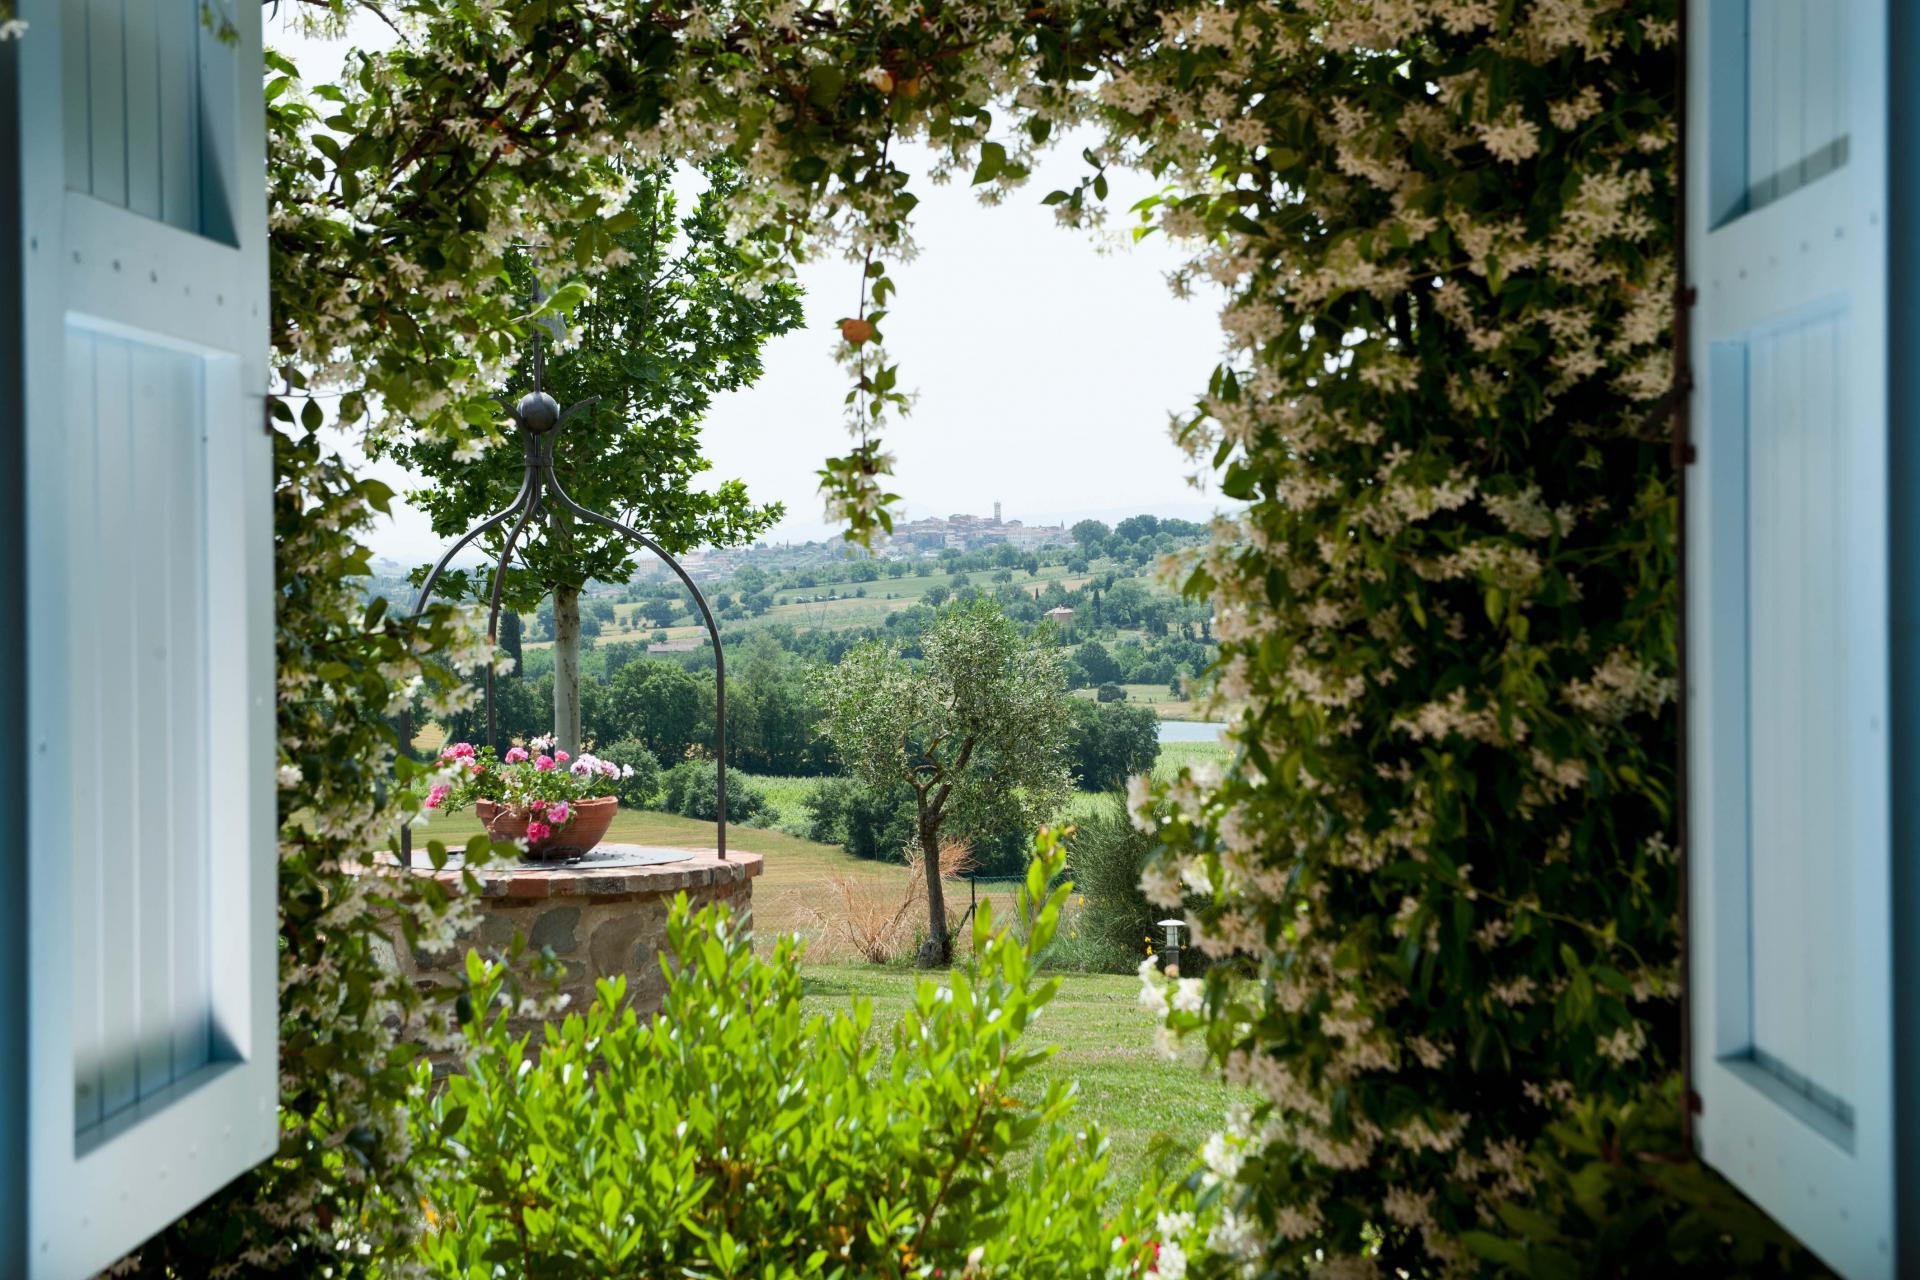 Agriturismo Toscane Agriturismo nabij Arezzo  – heerlijk relaxen | myitaly.nl